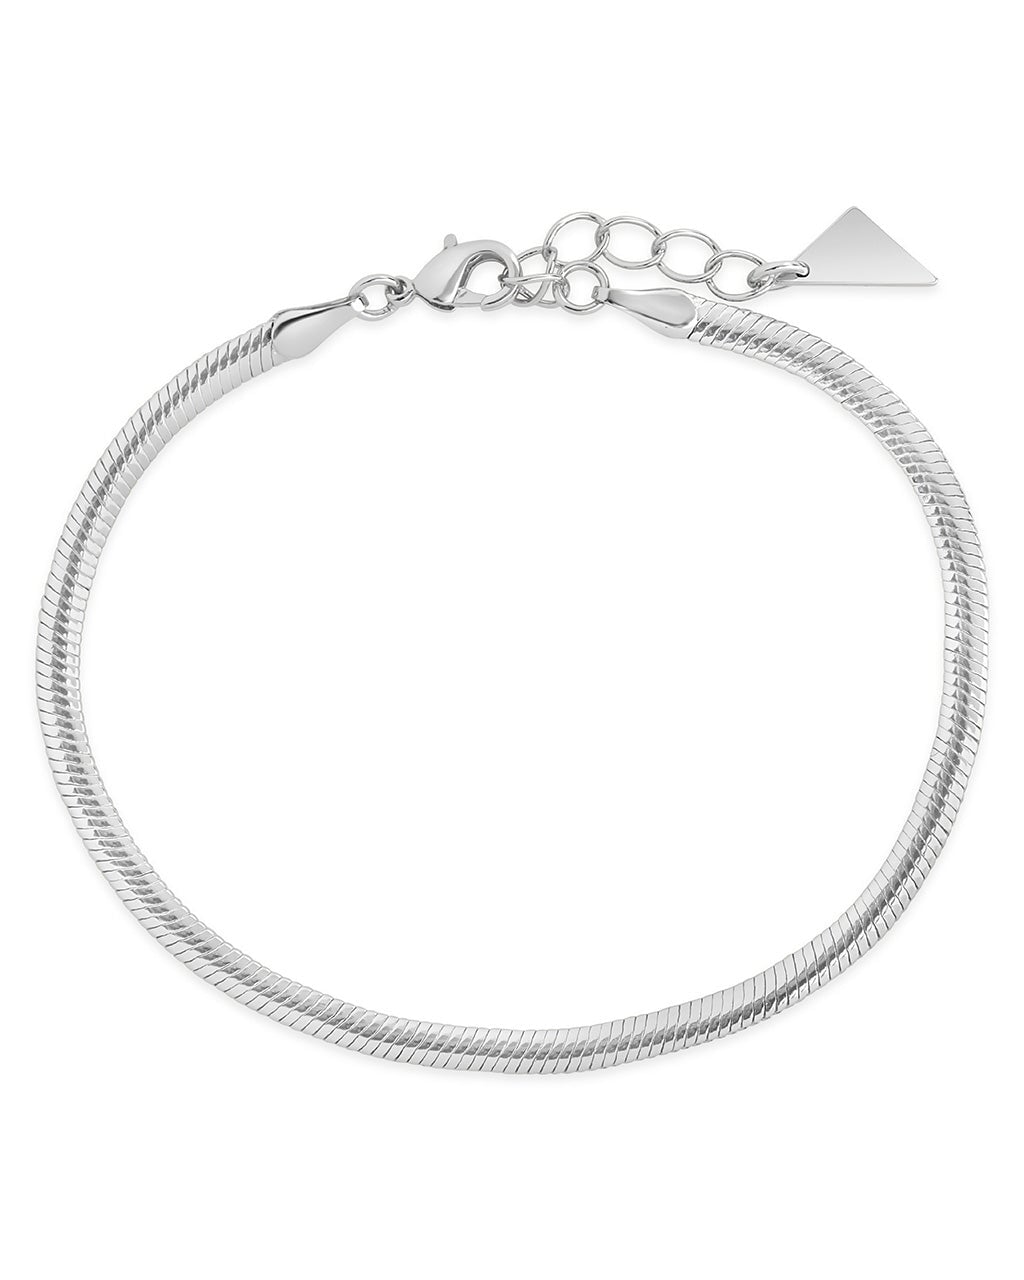 Cami Chain Bracelet Bracelet Sterling Forever Silver 